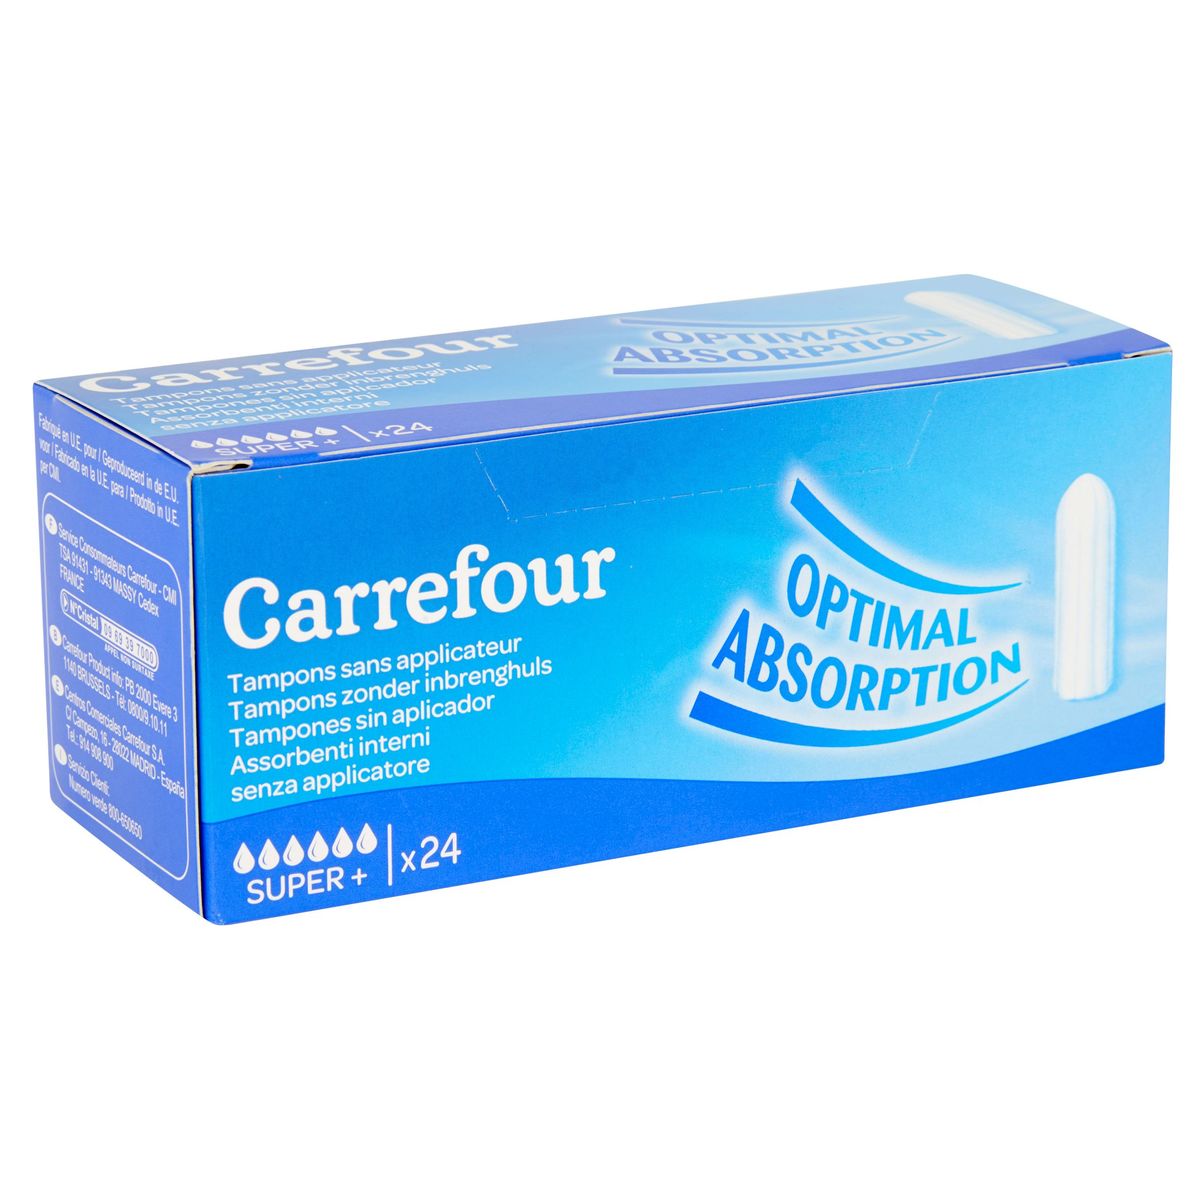 Carrefour Tampons Zonder Inbrenghuls Super+ x 24